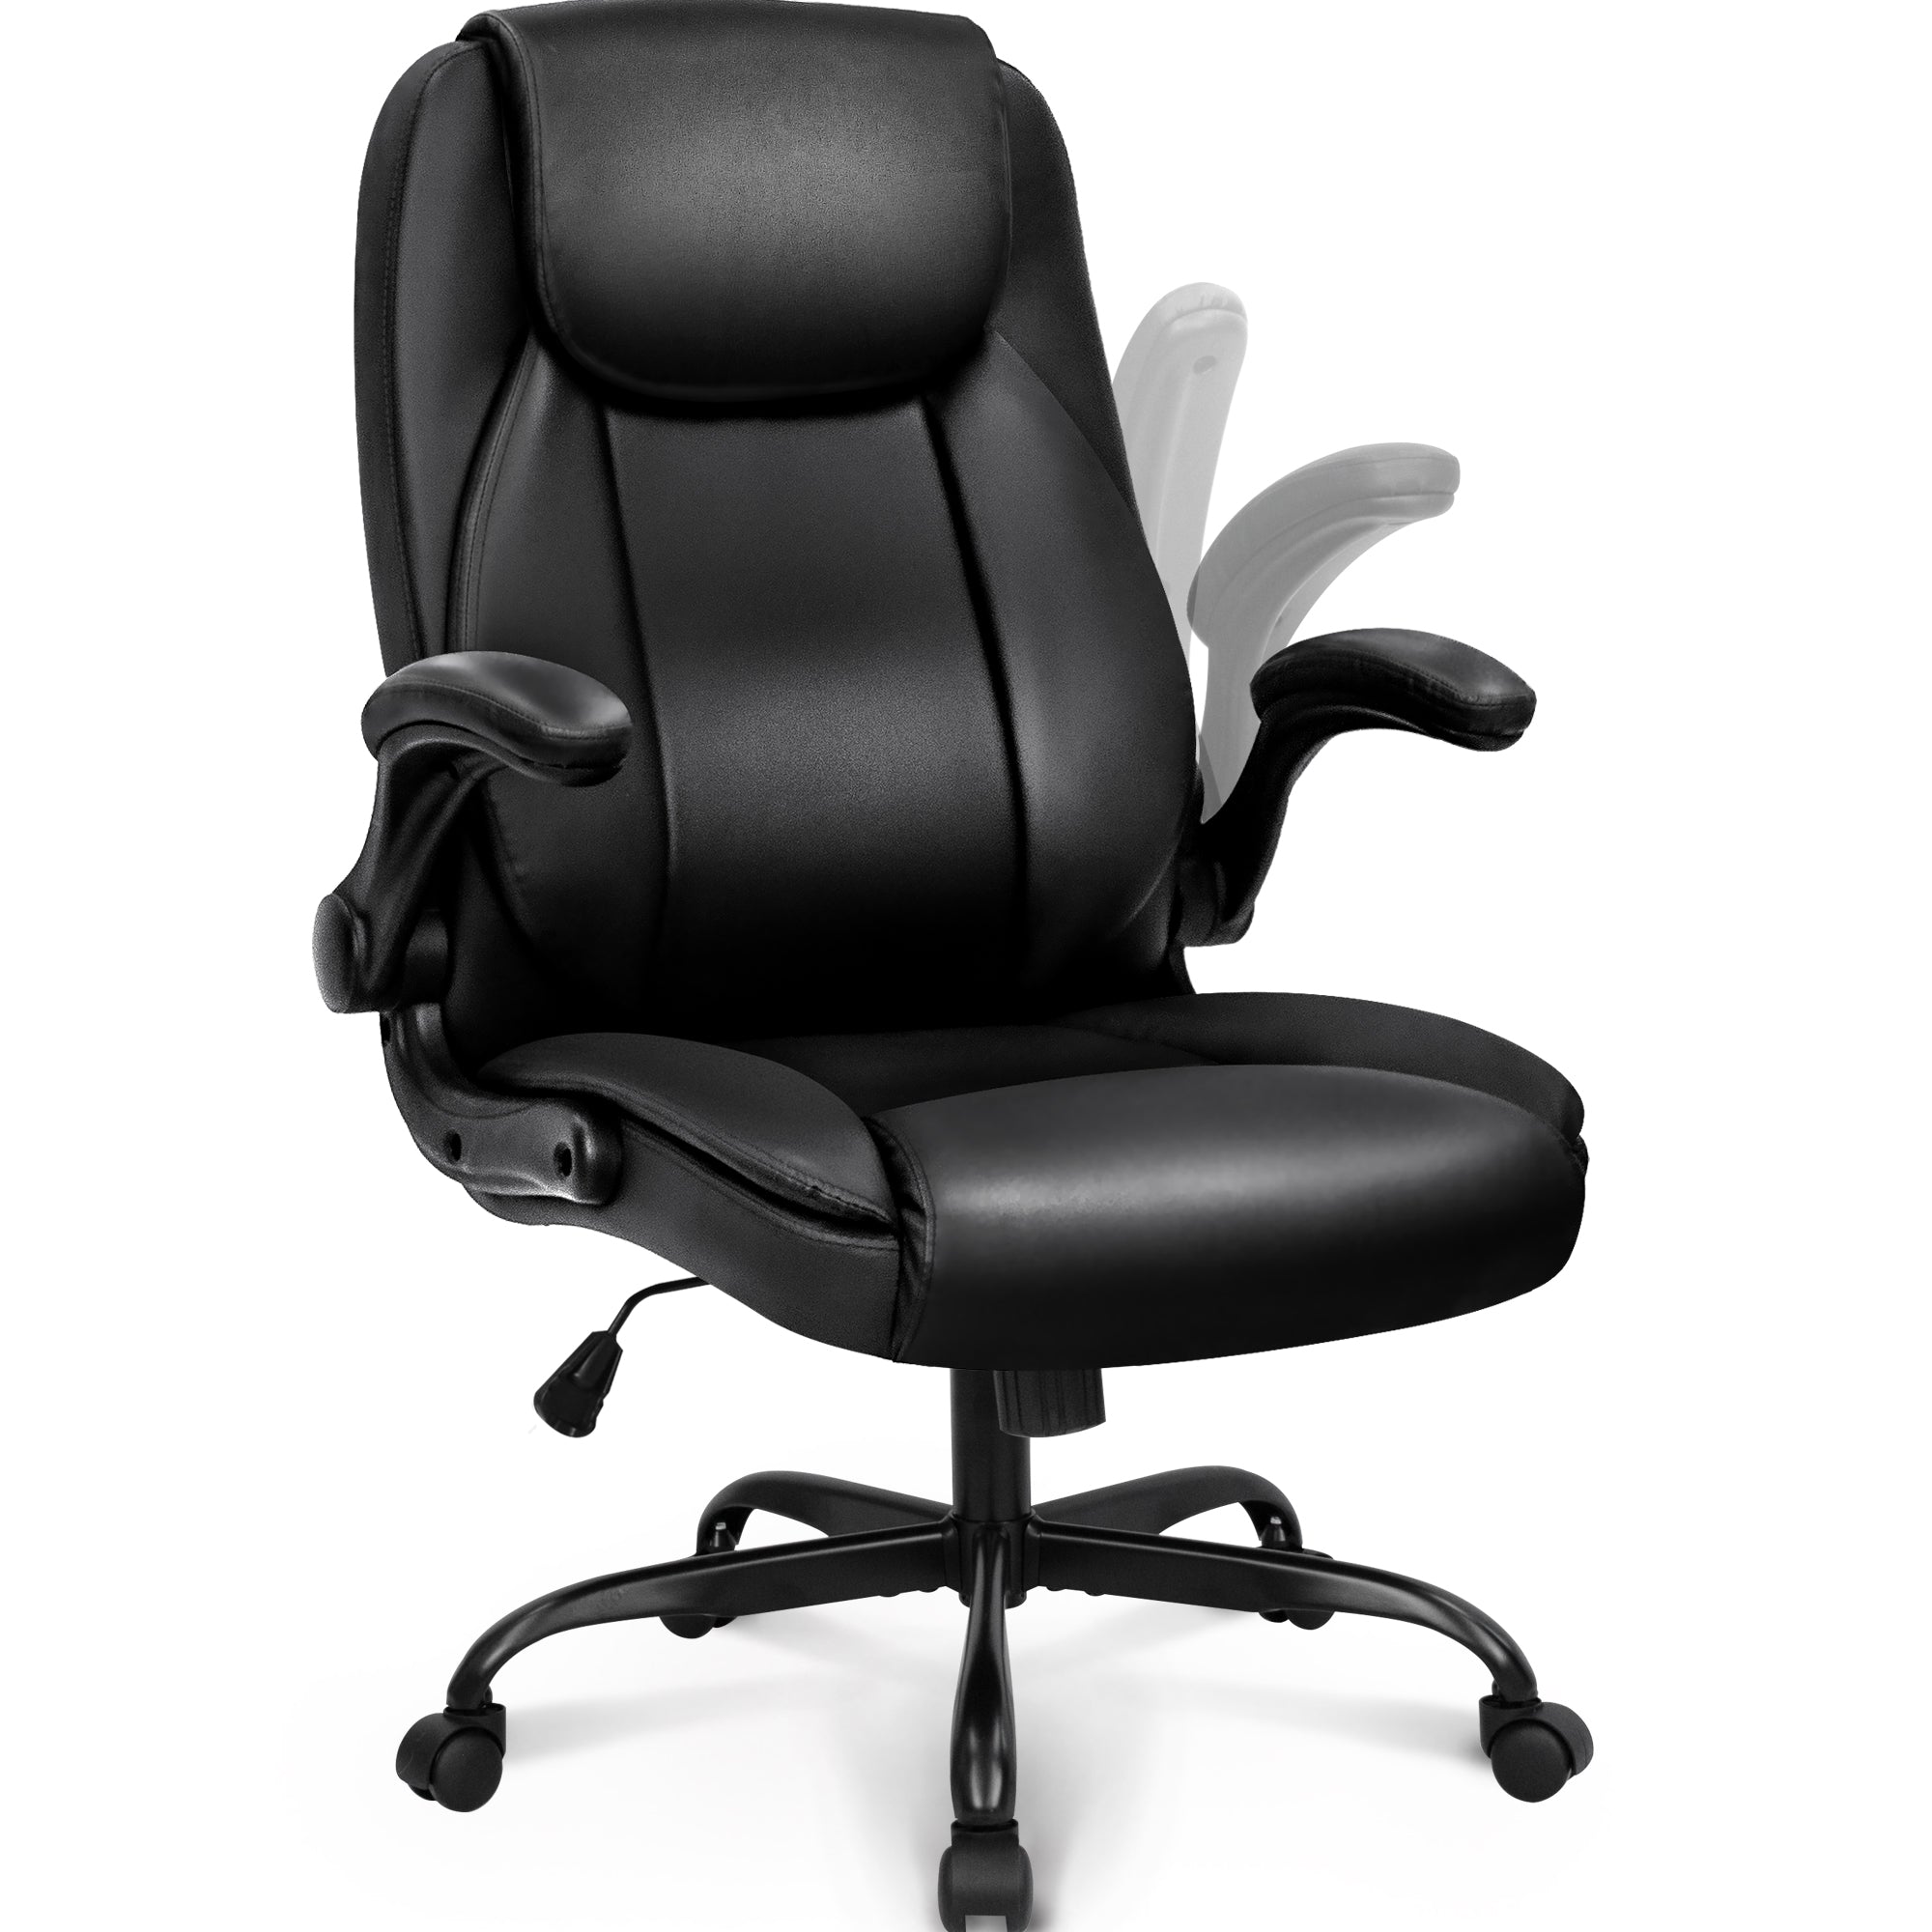 H-PAC 社長椅子 高級 椅子 ハイバック オフィスチェア デスクチェア PC 